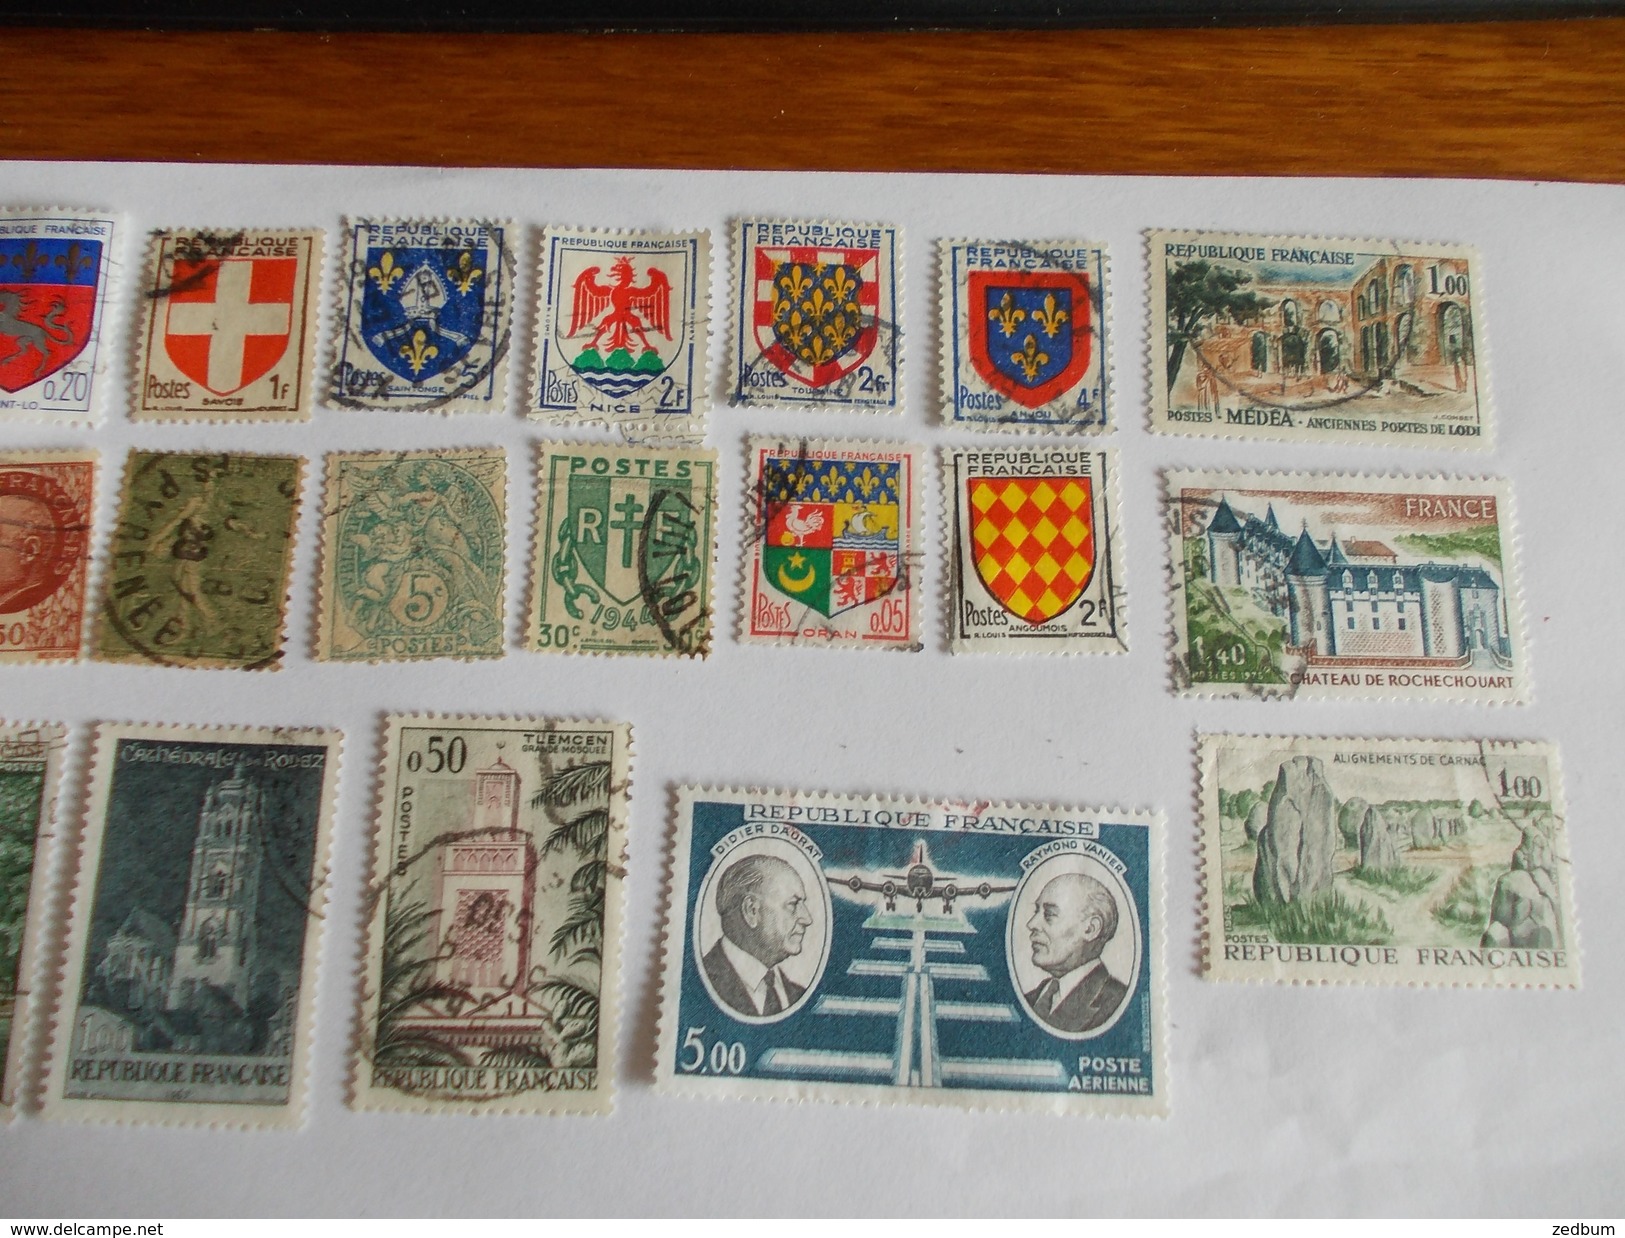 TIMBRE France Lot De 30 Timbres à Identifier N° 540 - Lots & Kiloware (mixtures) - Max. 999 Stamps